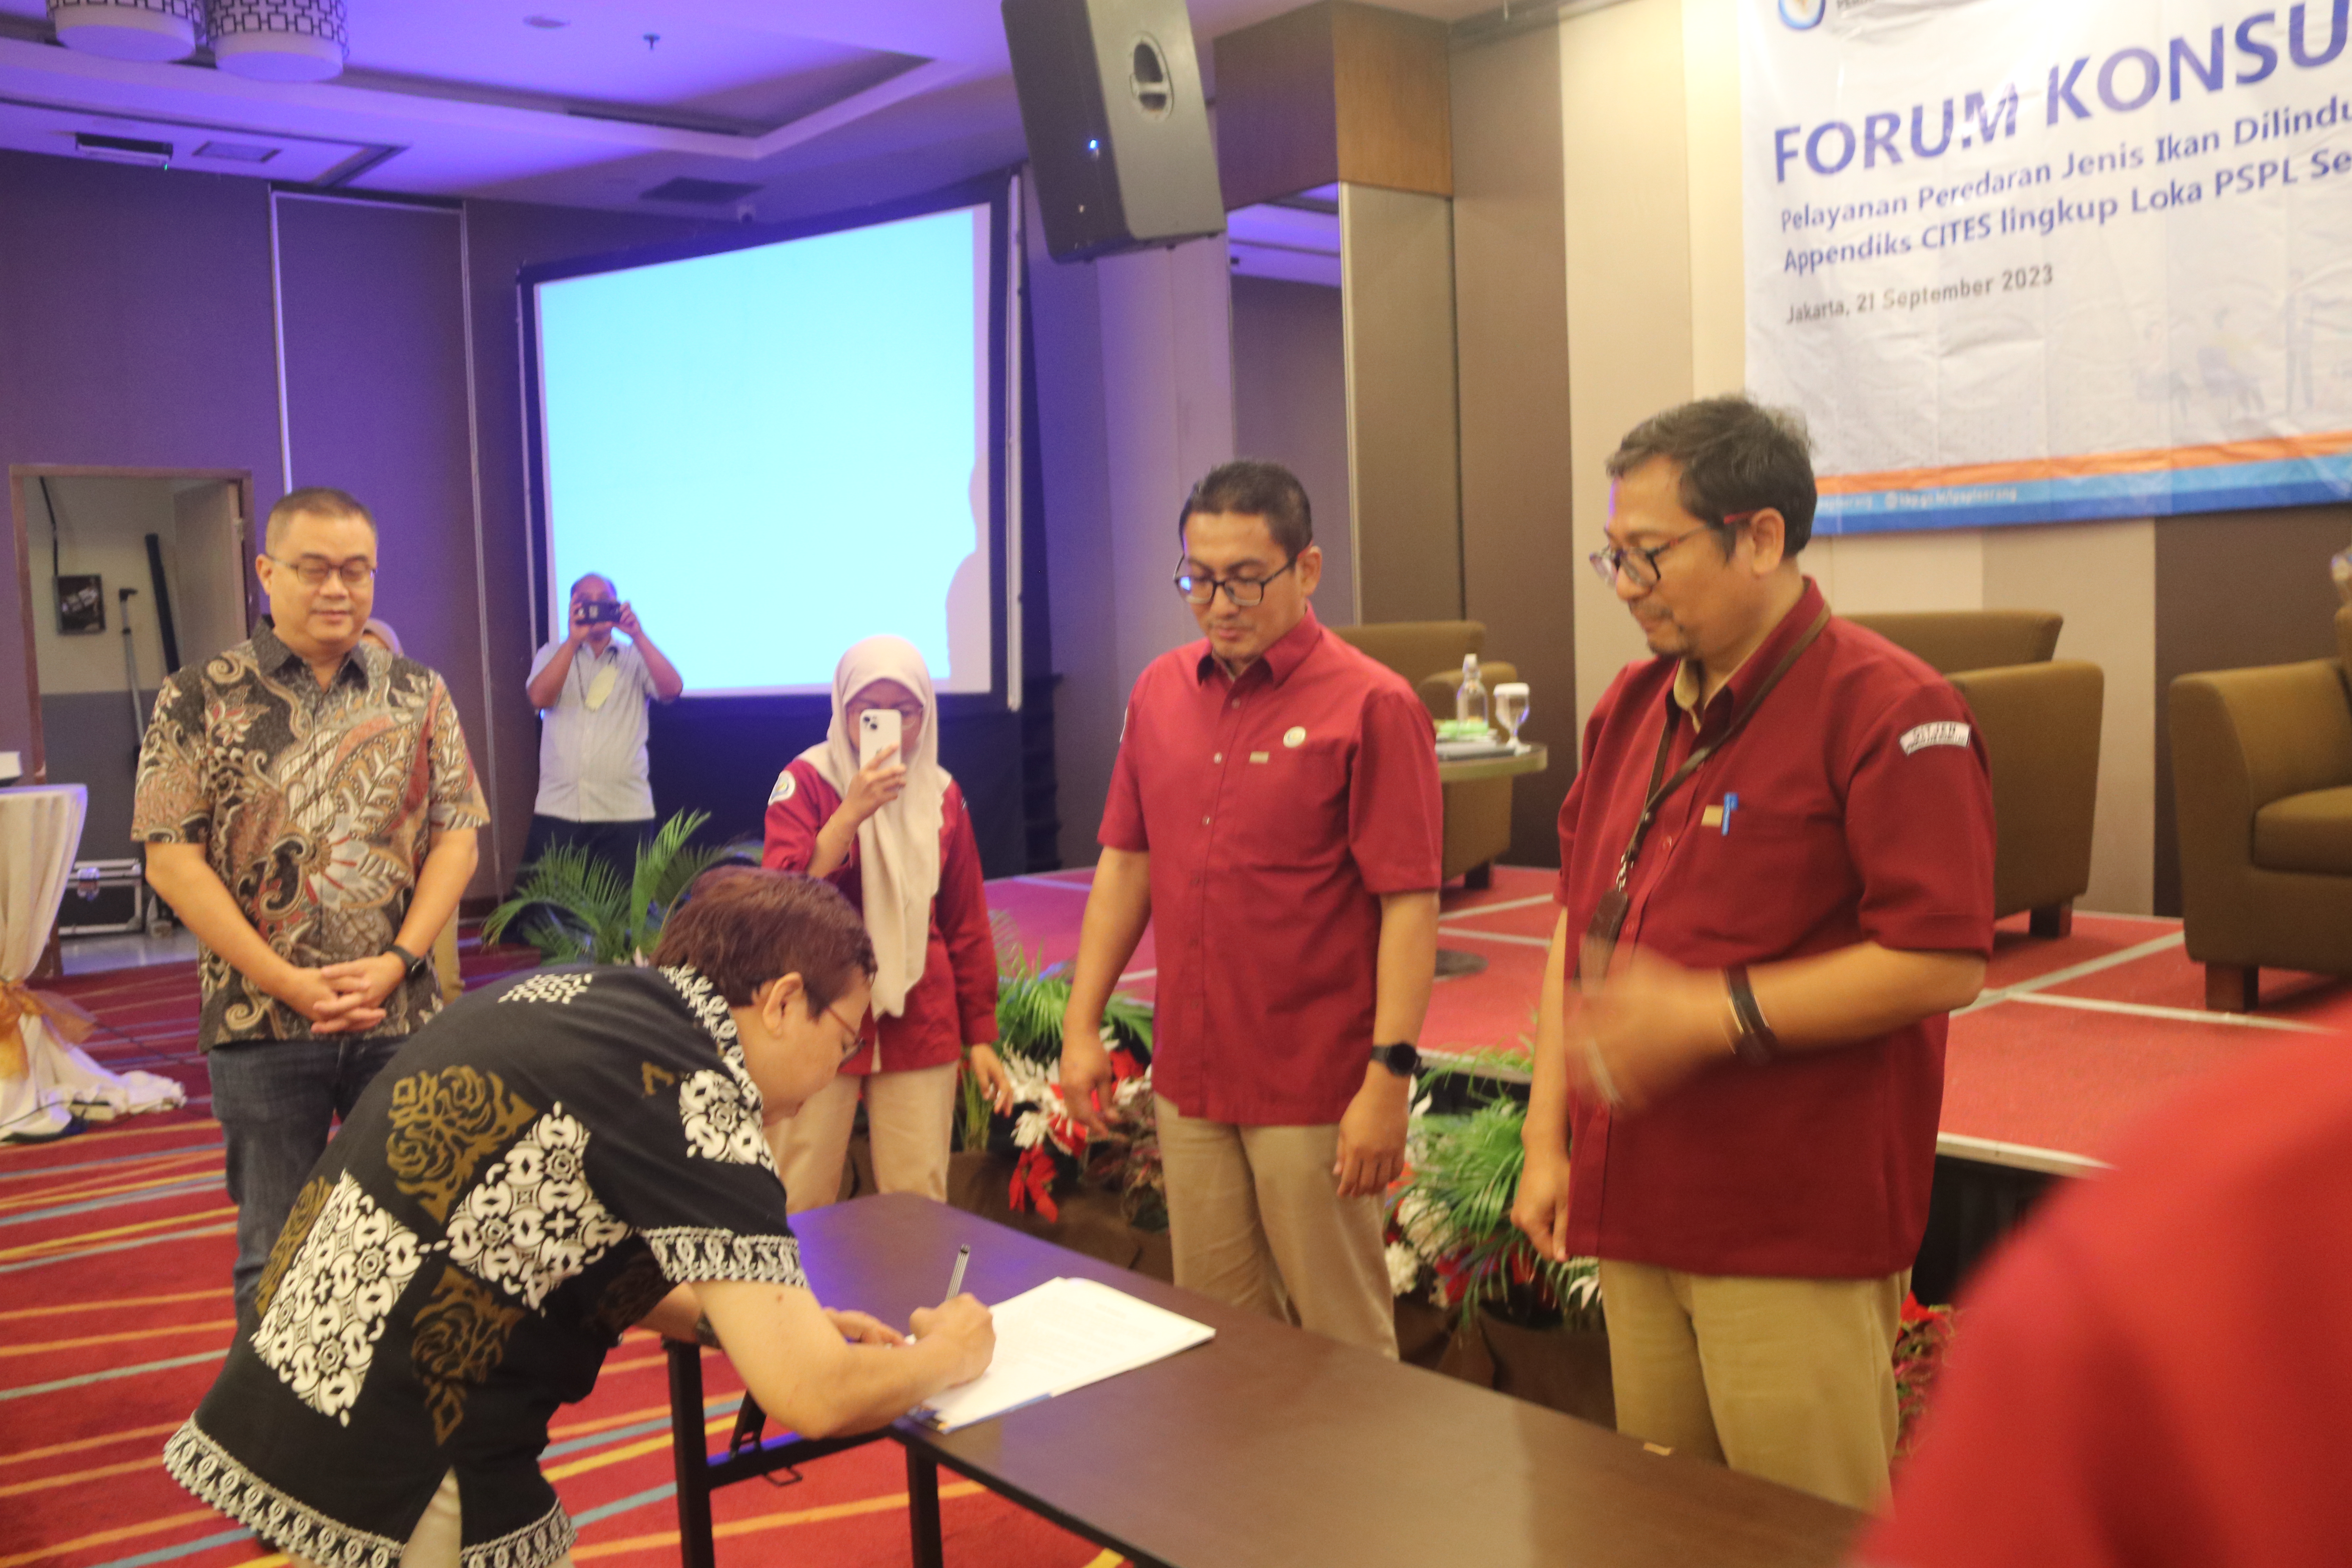 Forum Konsultasi Publik Pelayanan Peredaran Jenis Ikan Dilindungi dan/atau Appendik Cites Lingkup Loka PSPL Serang, Jakarta (21/9).